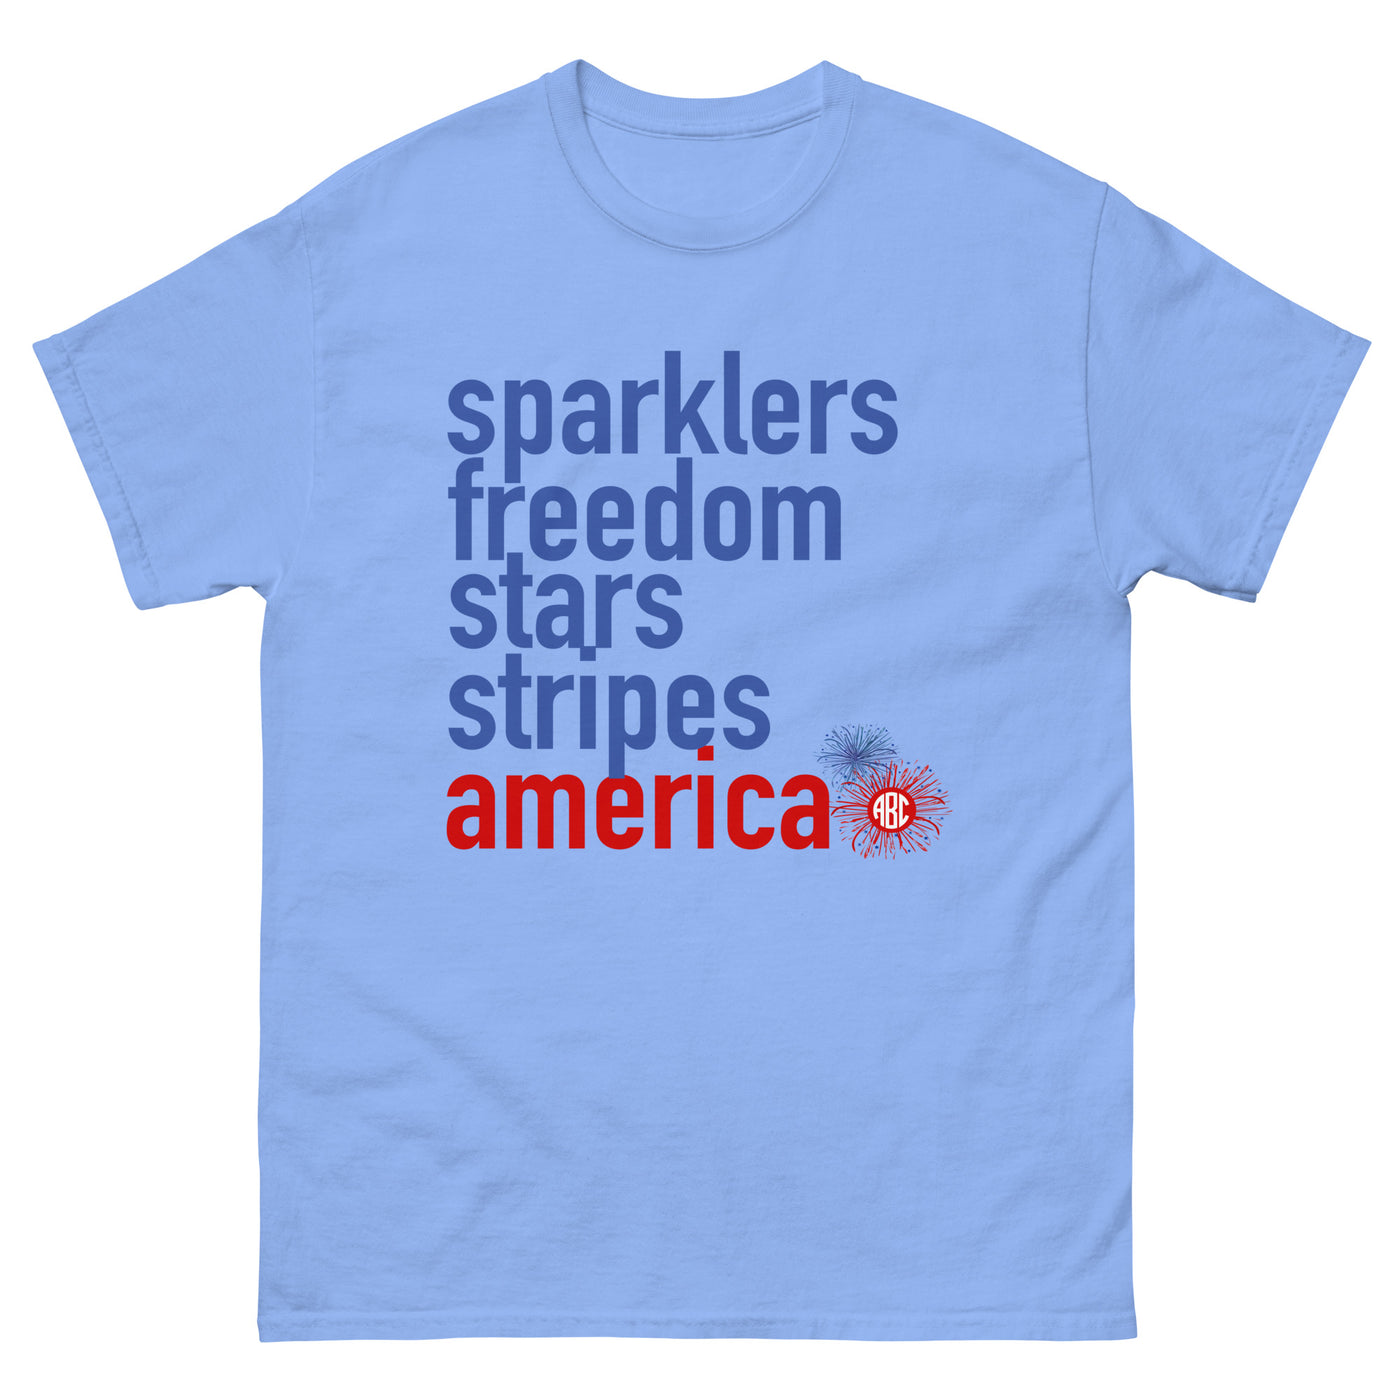 Monogrammed 'Sparklers' Basic T-Shirt